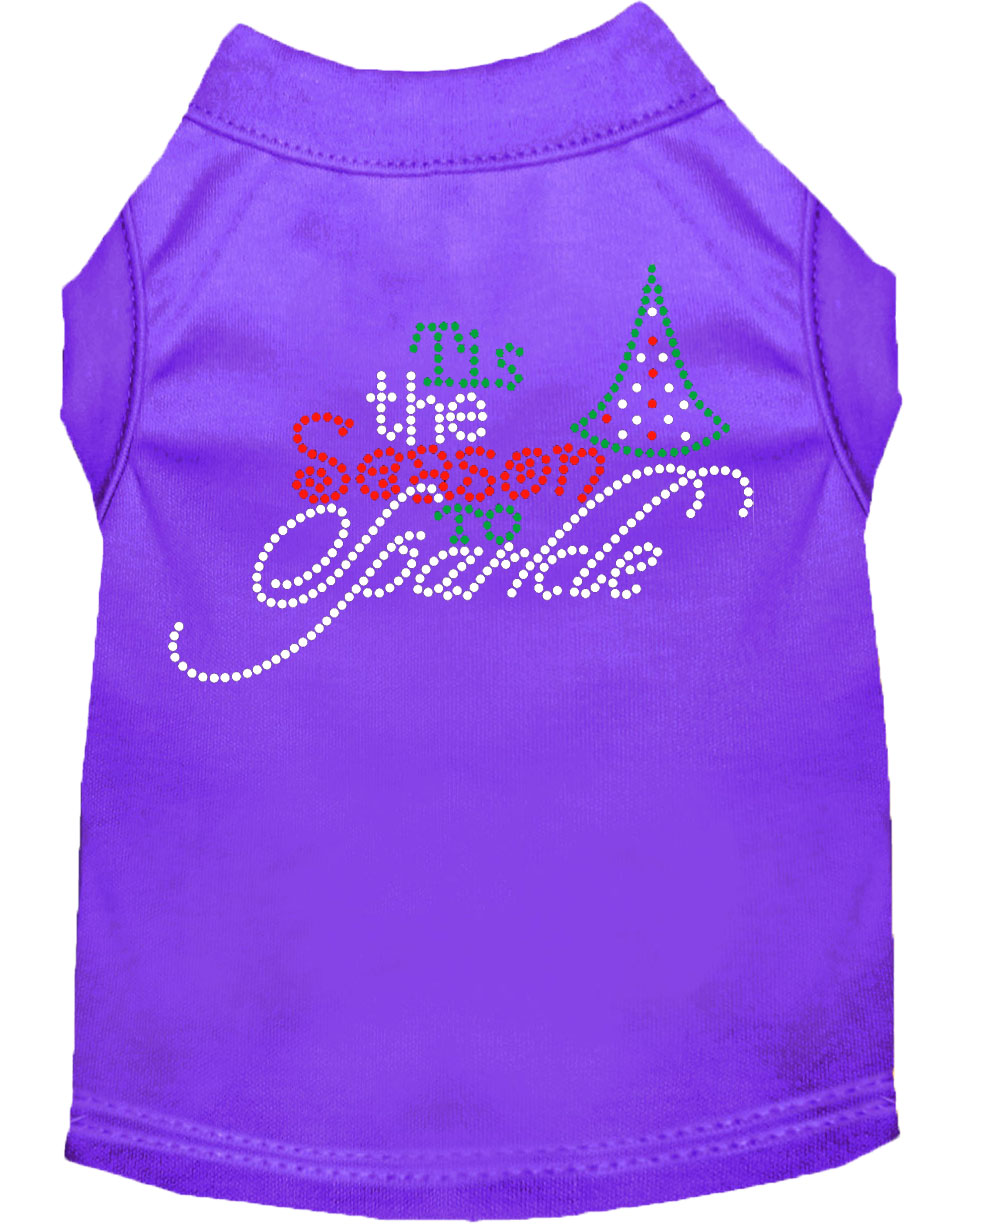 Tis the Season to Sparkle Rhinestone Dog Shirt Purple Lg